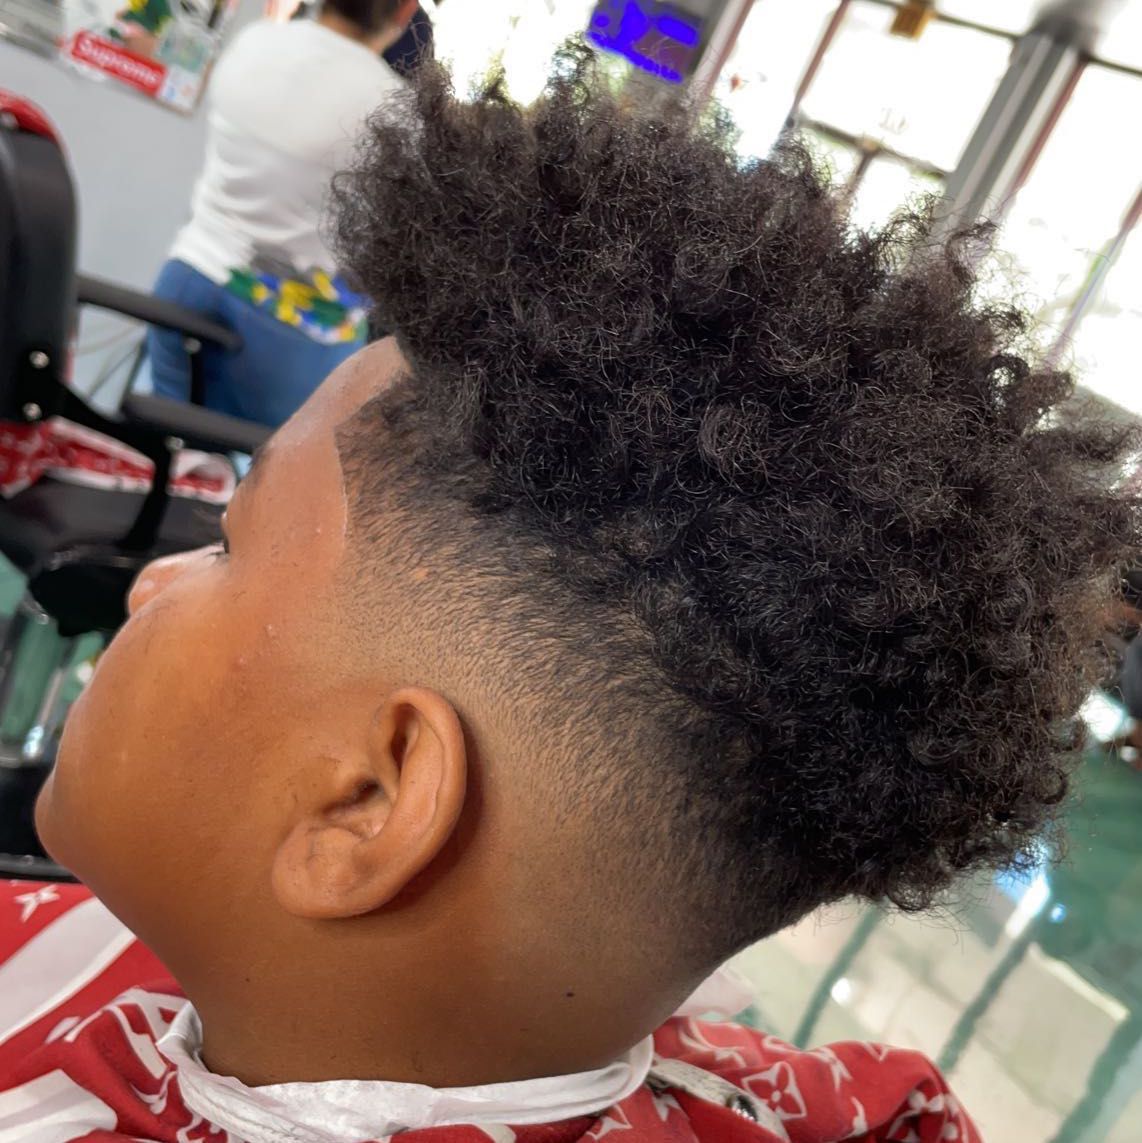 Kids Haircuts  (12 & under) portfolio